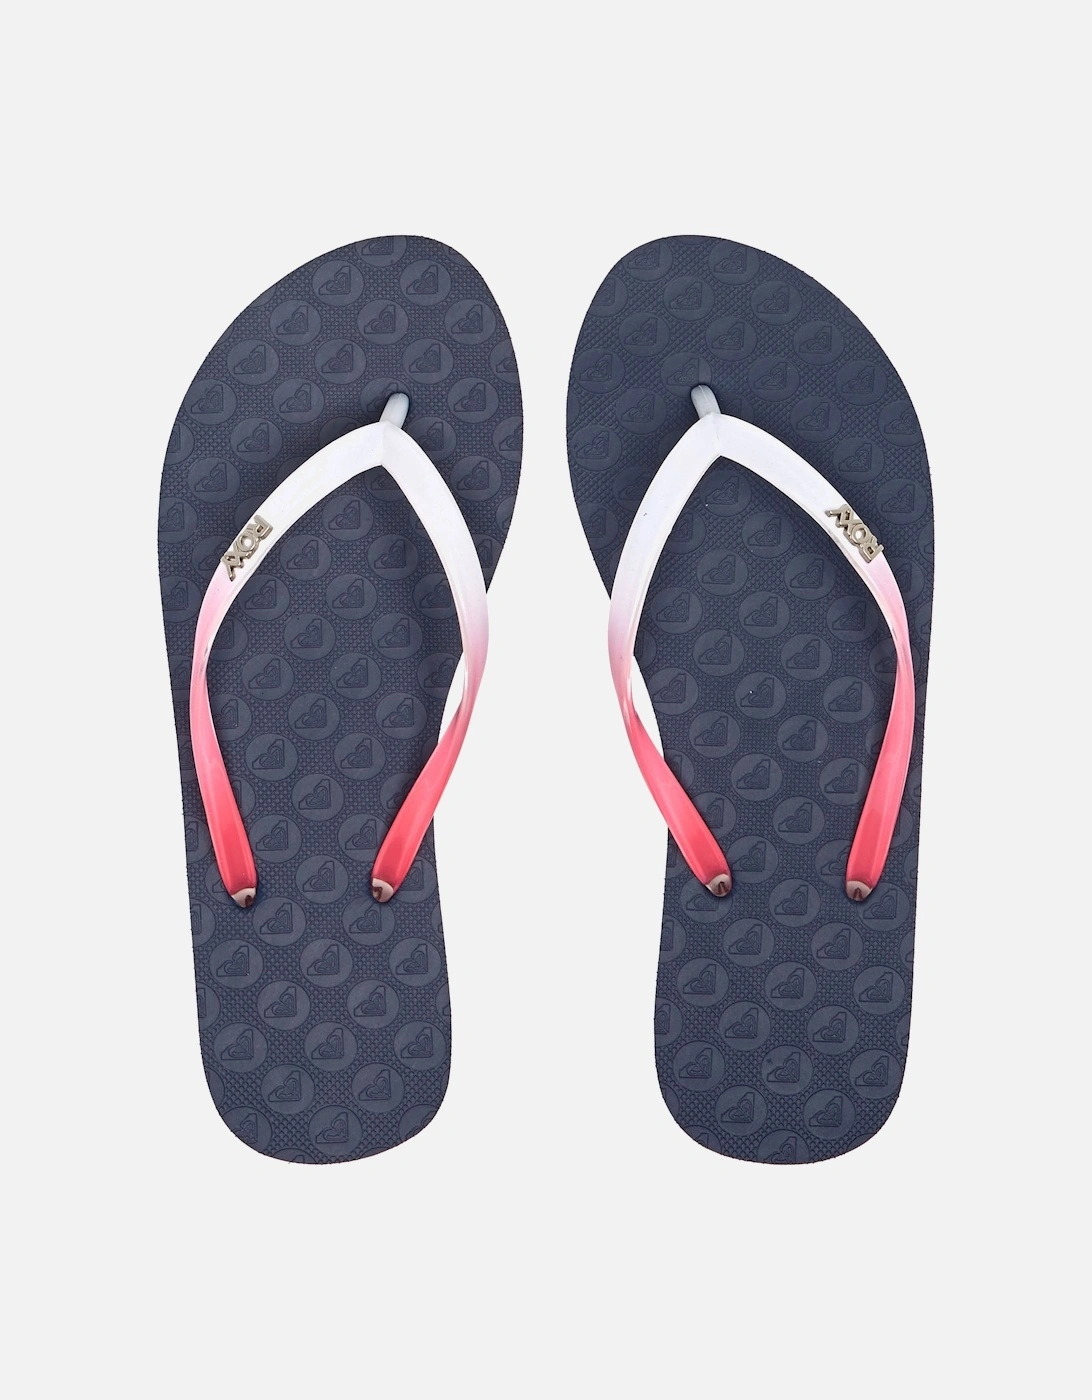 Womens Viva Gradient Summer Sandals Flip Flops